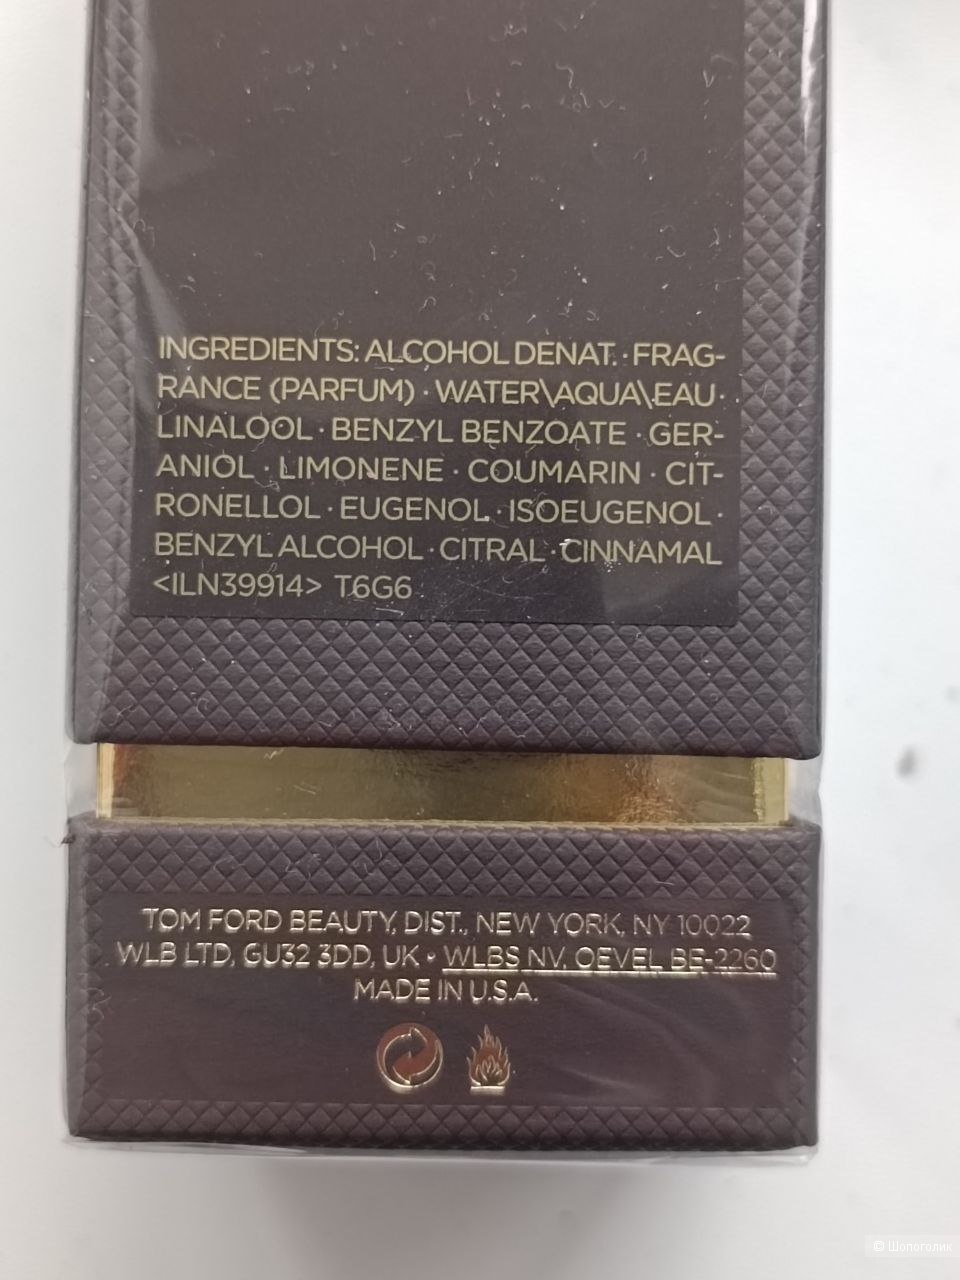 Парфюм Tom Ford Tobacco Vanilie Eau de Parfum 30 мл